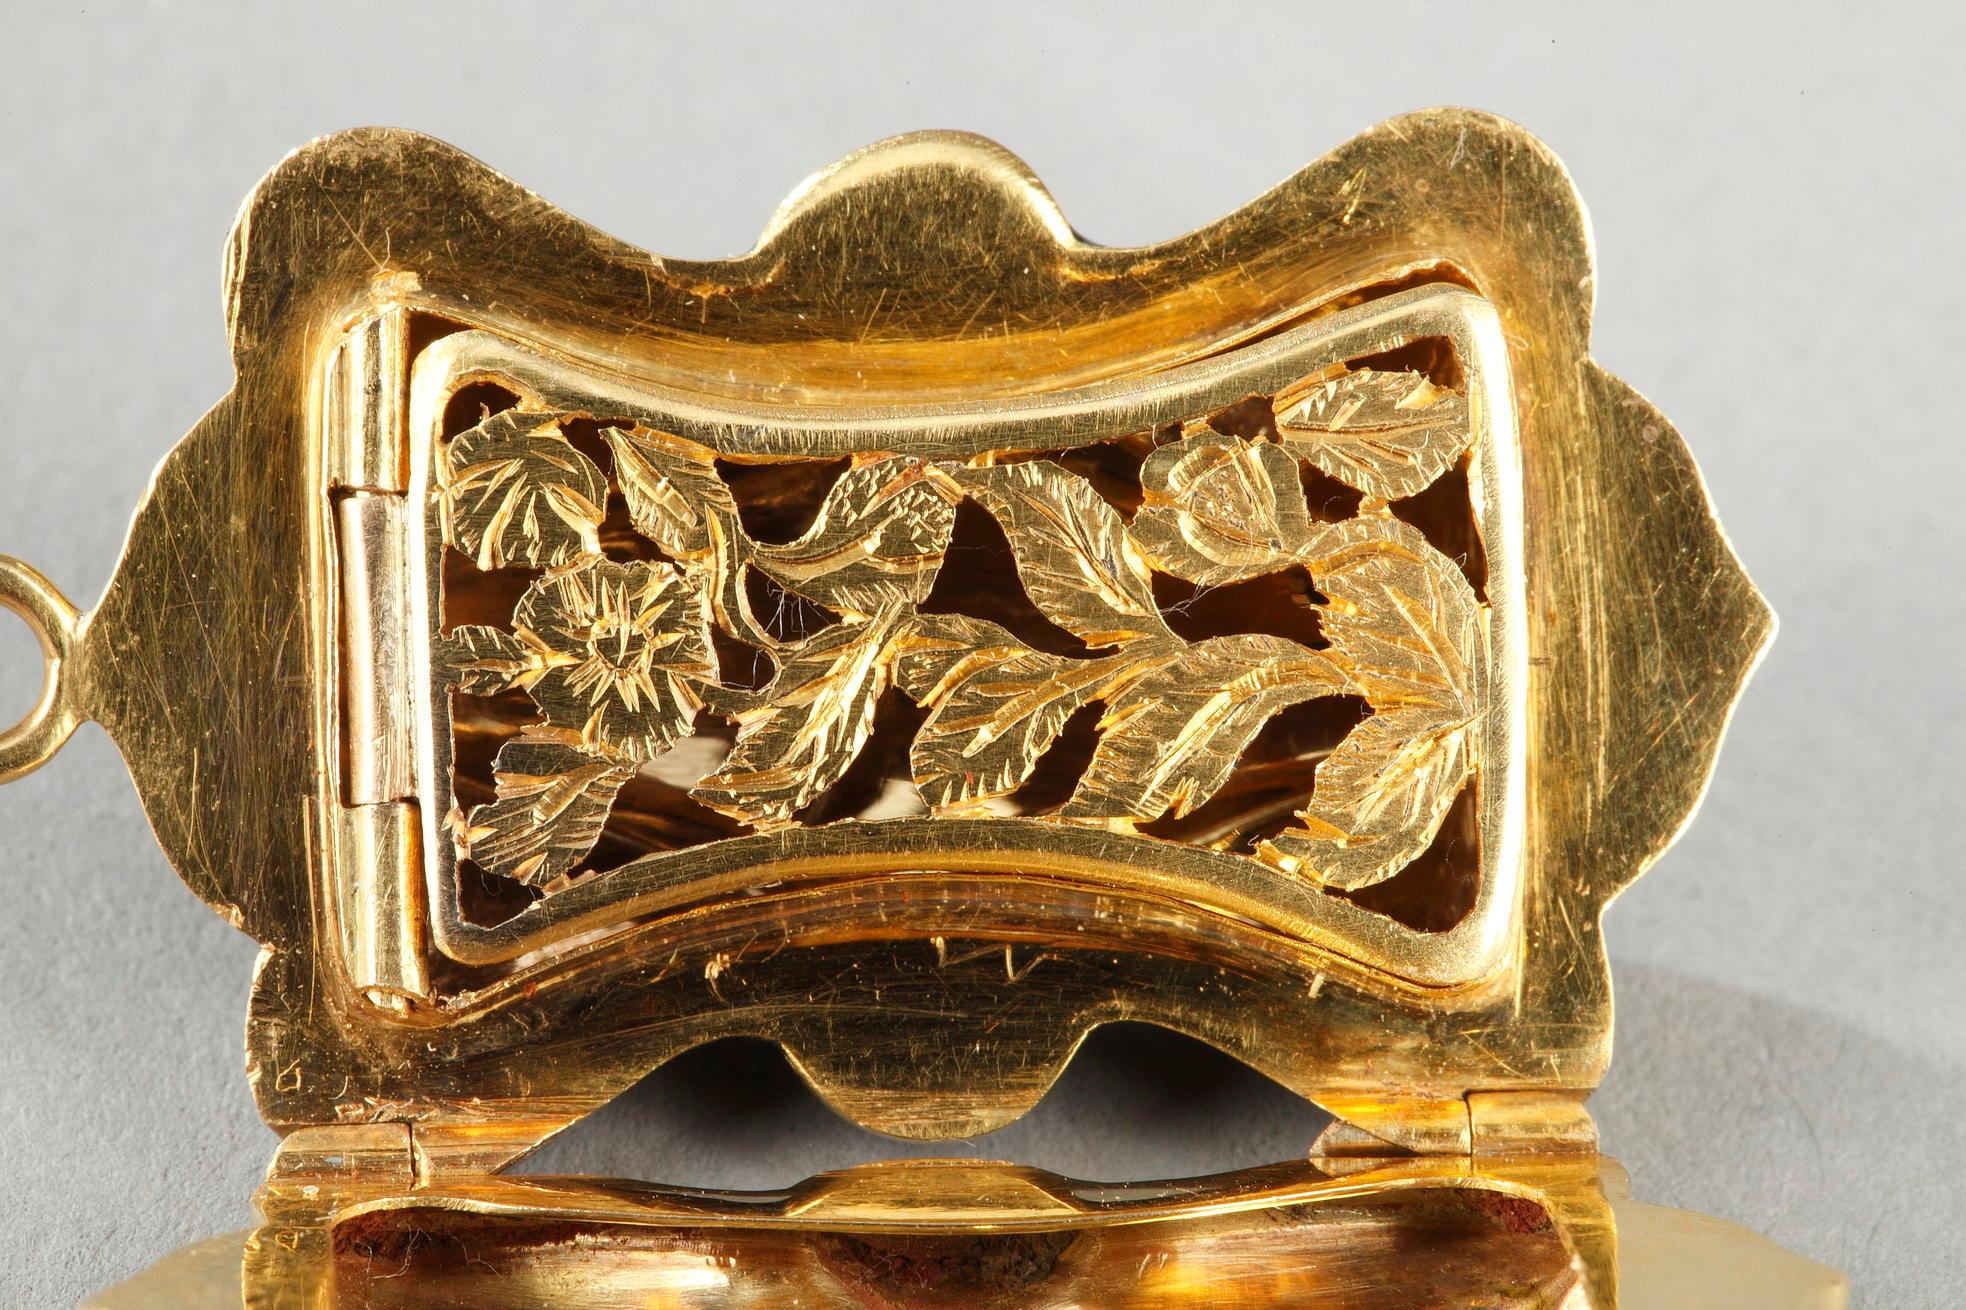 Gold and Enamel Vinaigrette, Mid-19th Century Work For Sale 2